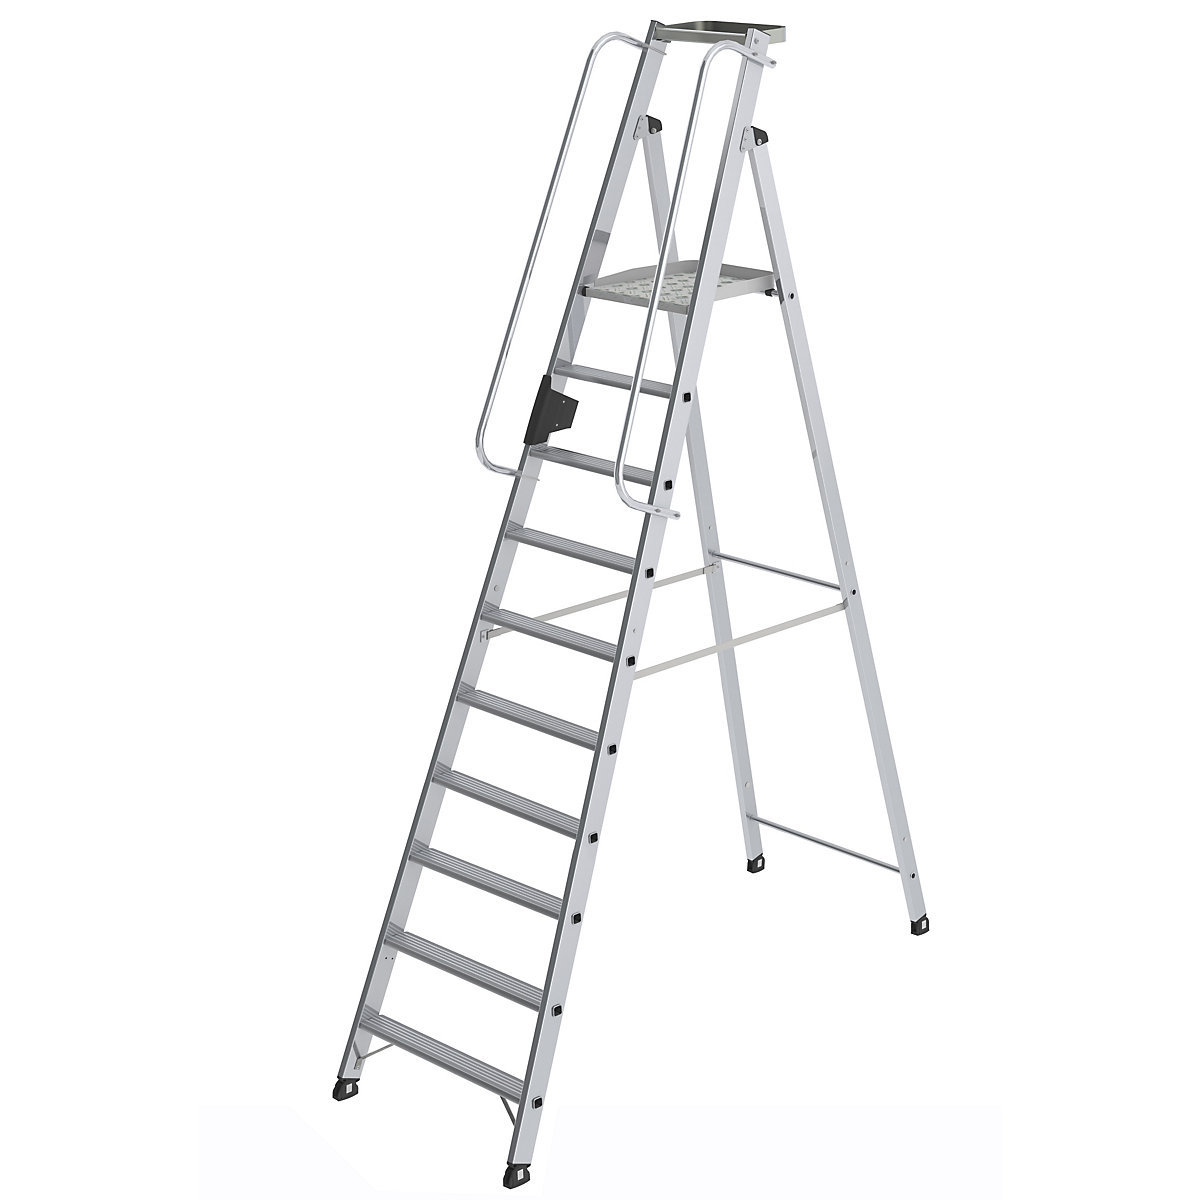 Aluminium step ladder with large platform – MUNK, hand rail on both sides, 10 steps incl. platform